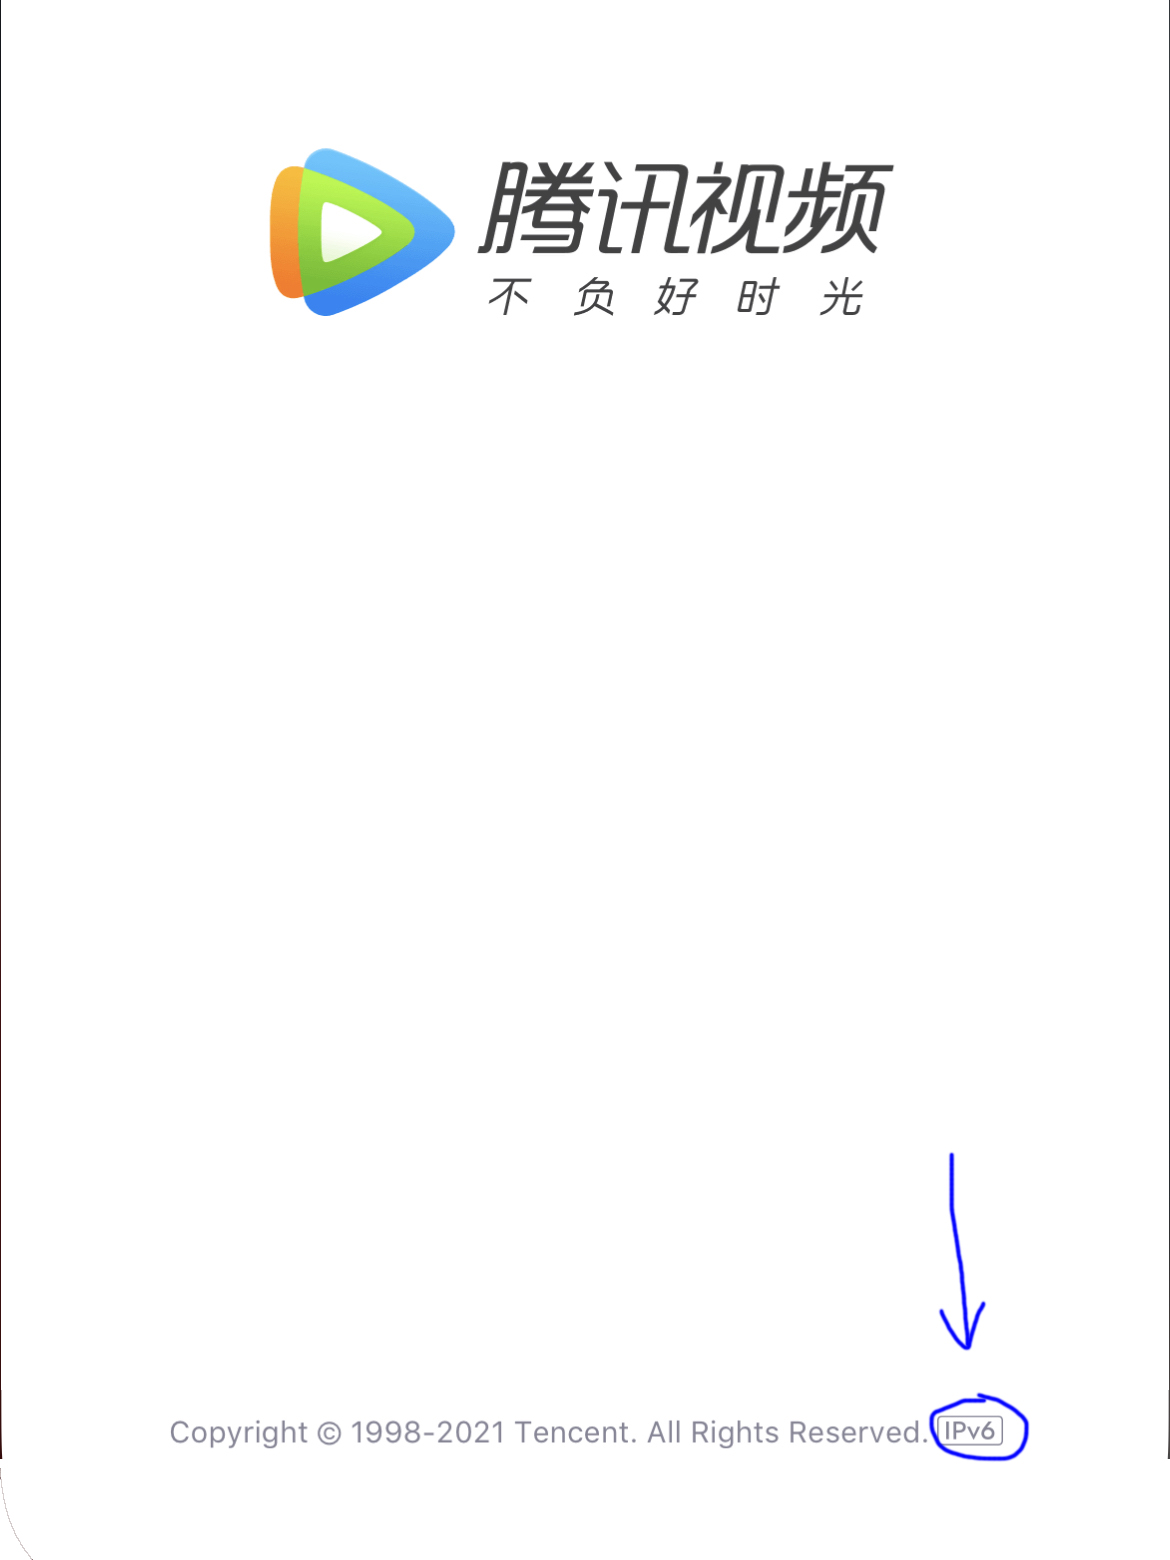 Tencent Video App IPv6 Sign